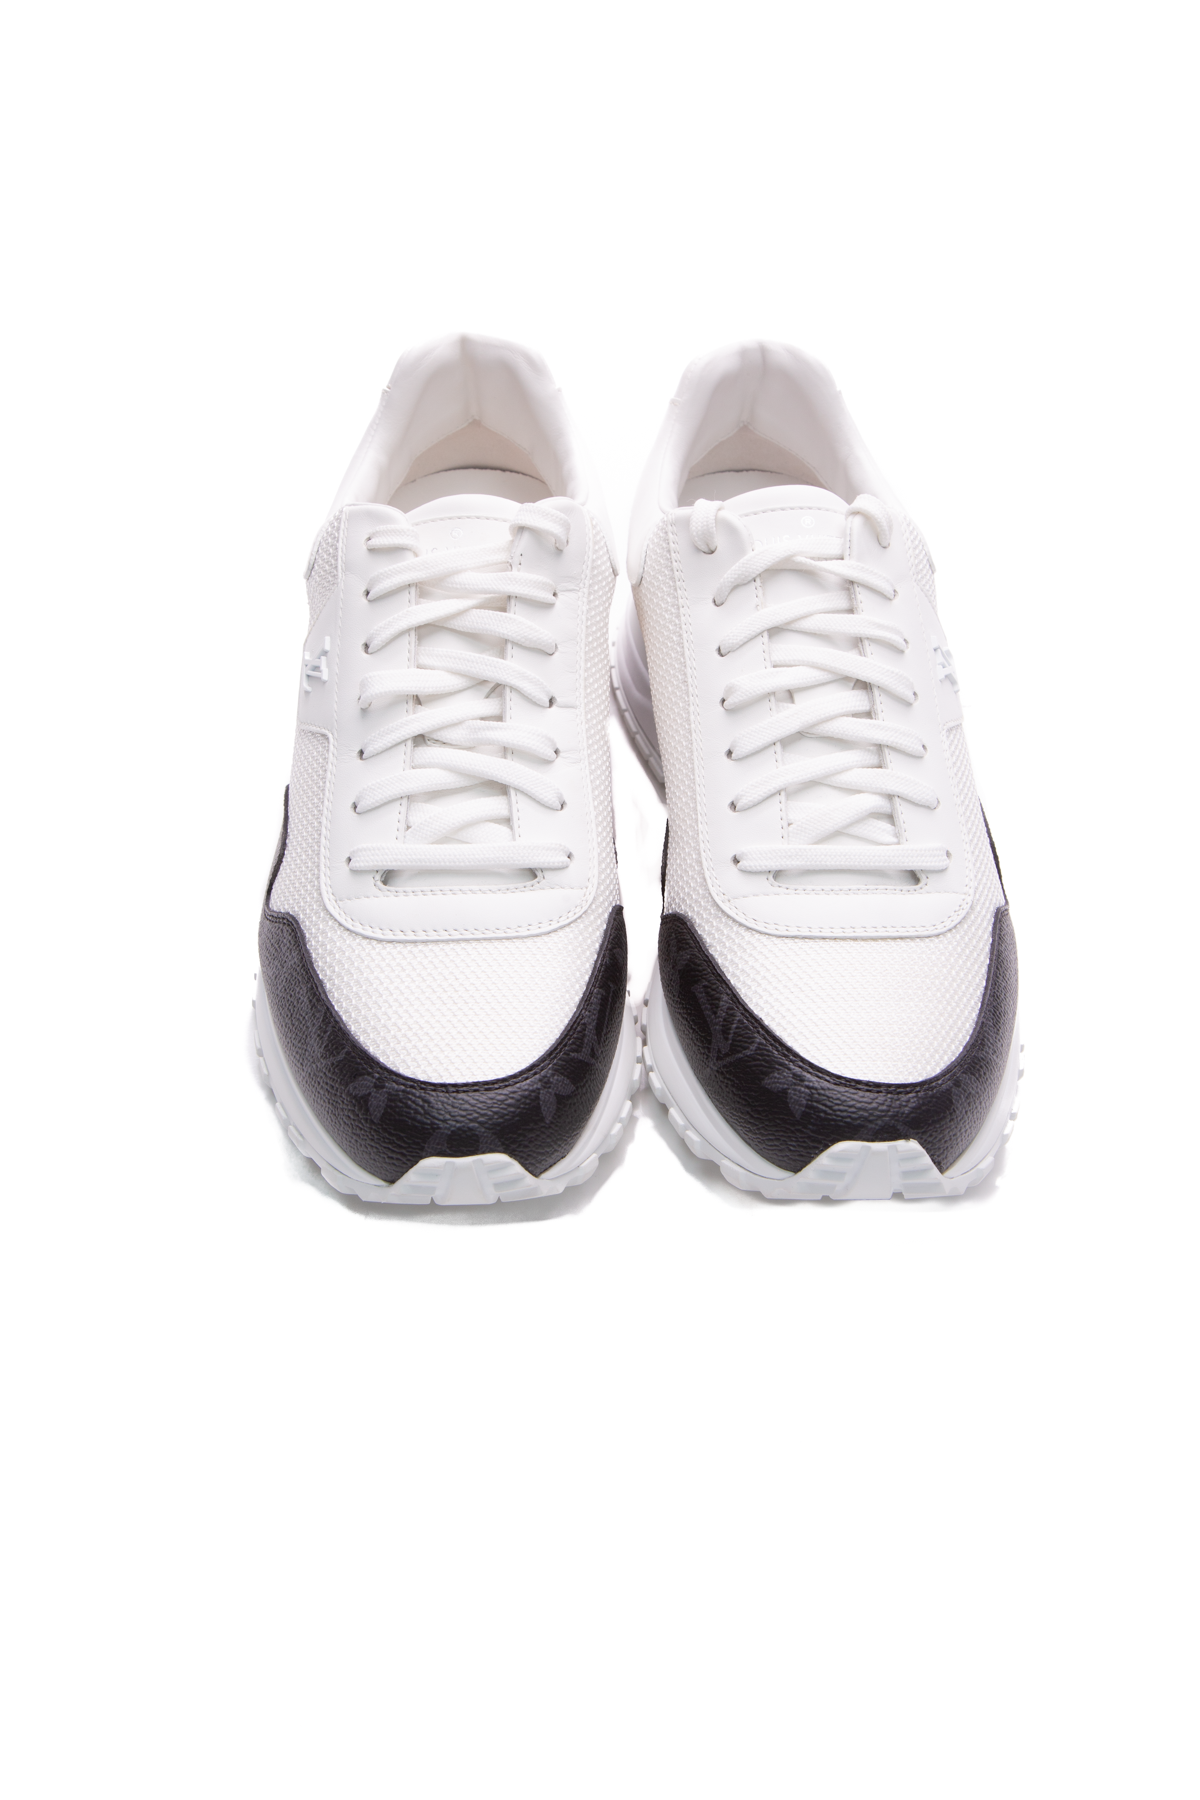 Louis Vuitton Eclipse Mens Run Away Sneakers- US Size 8